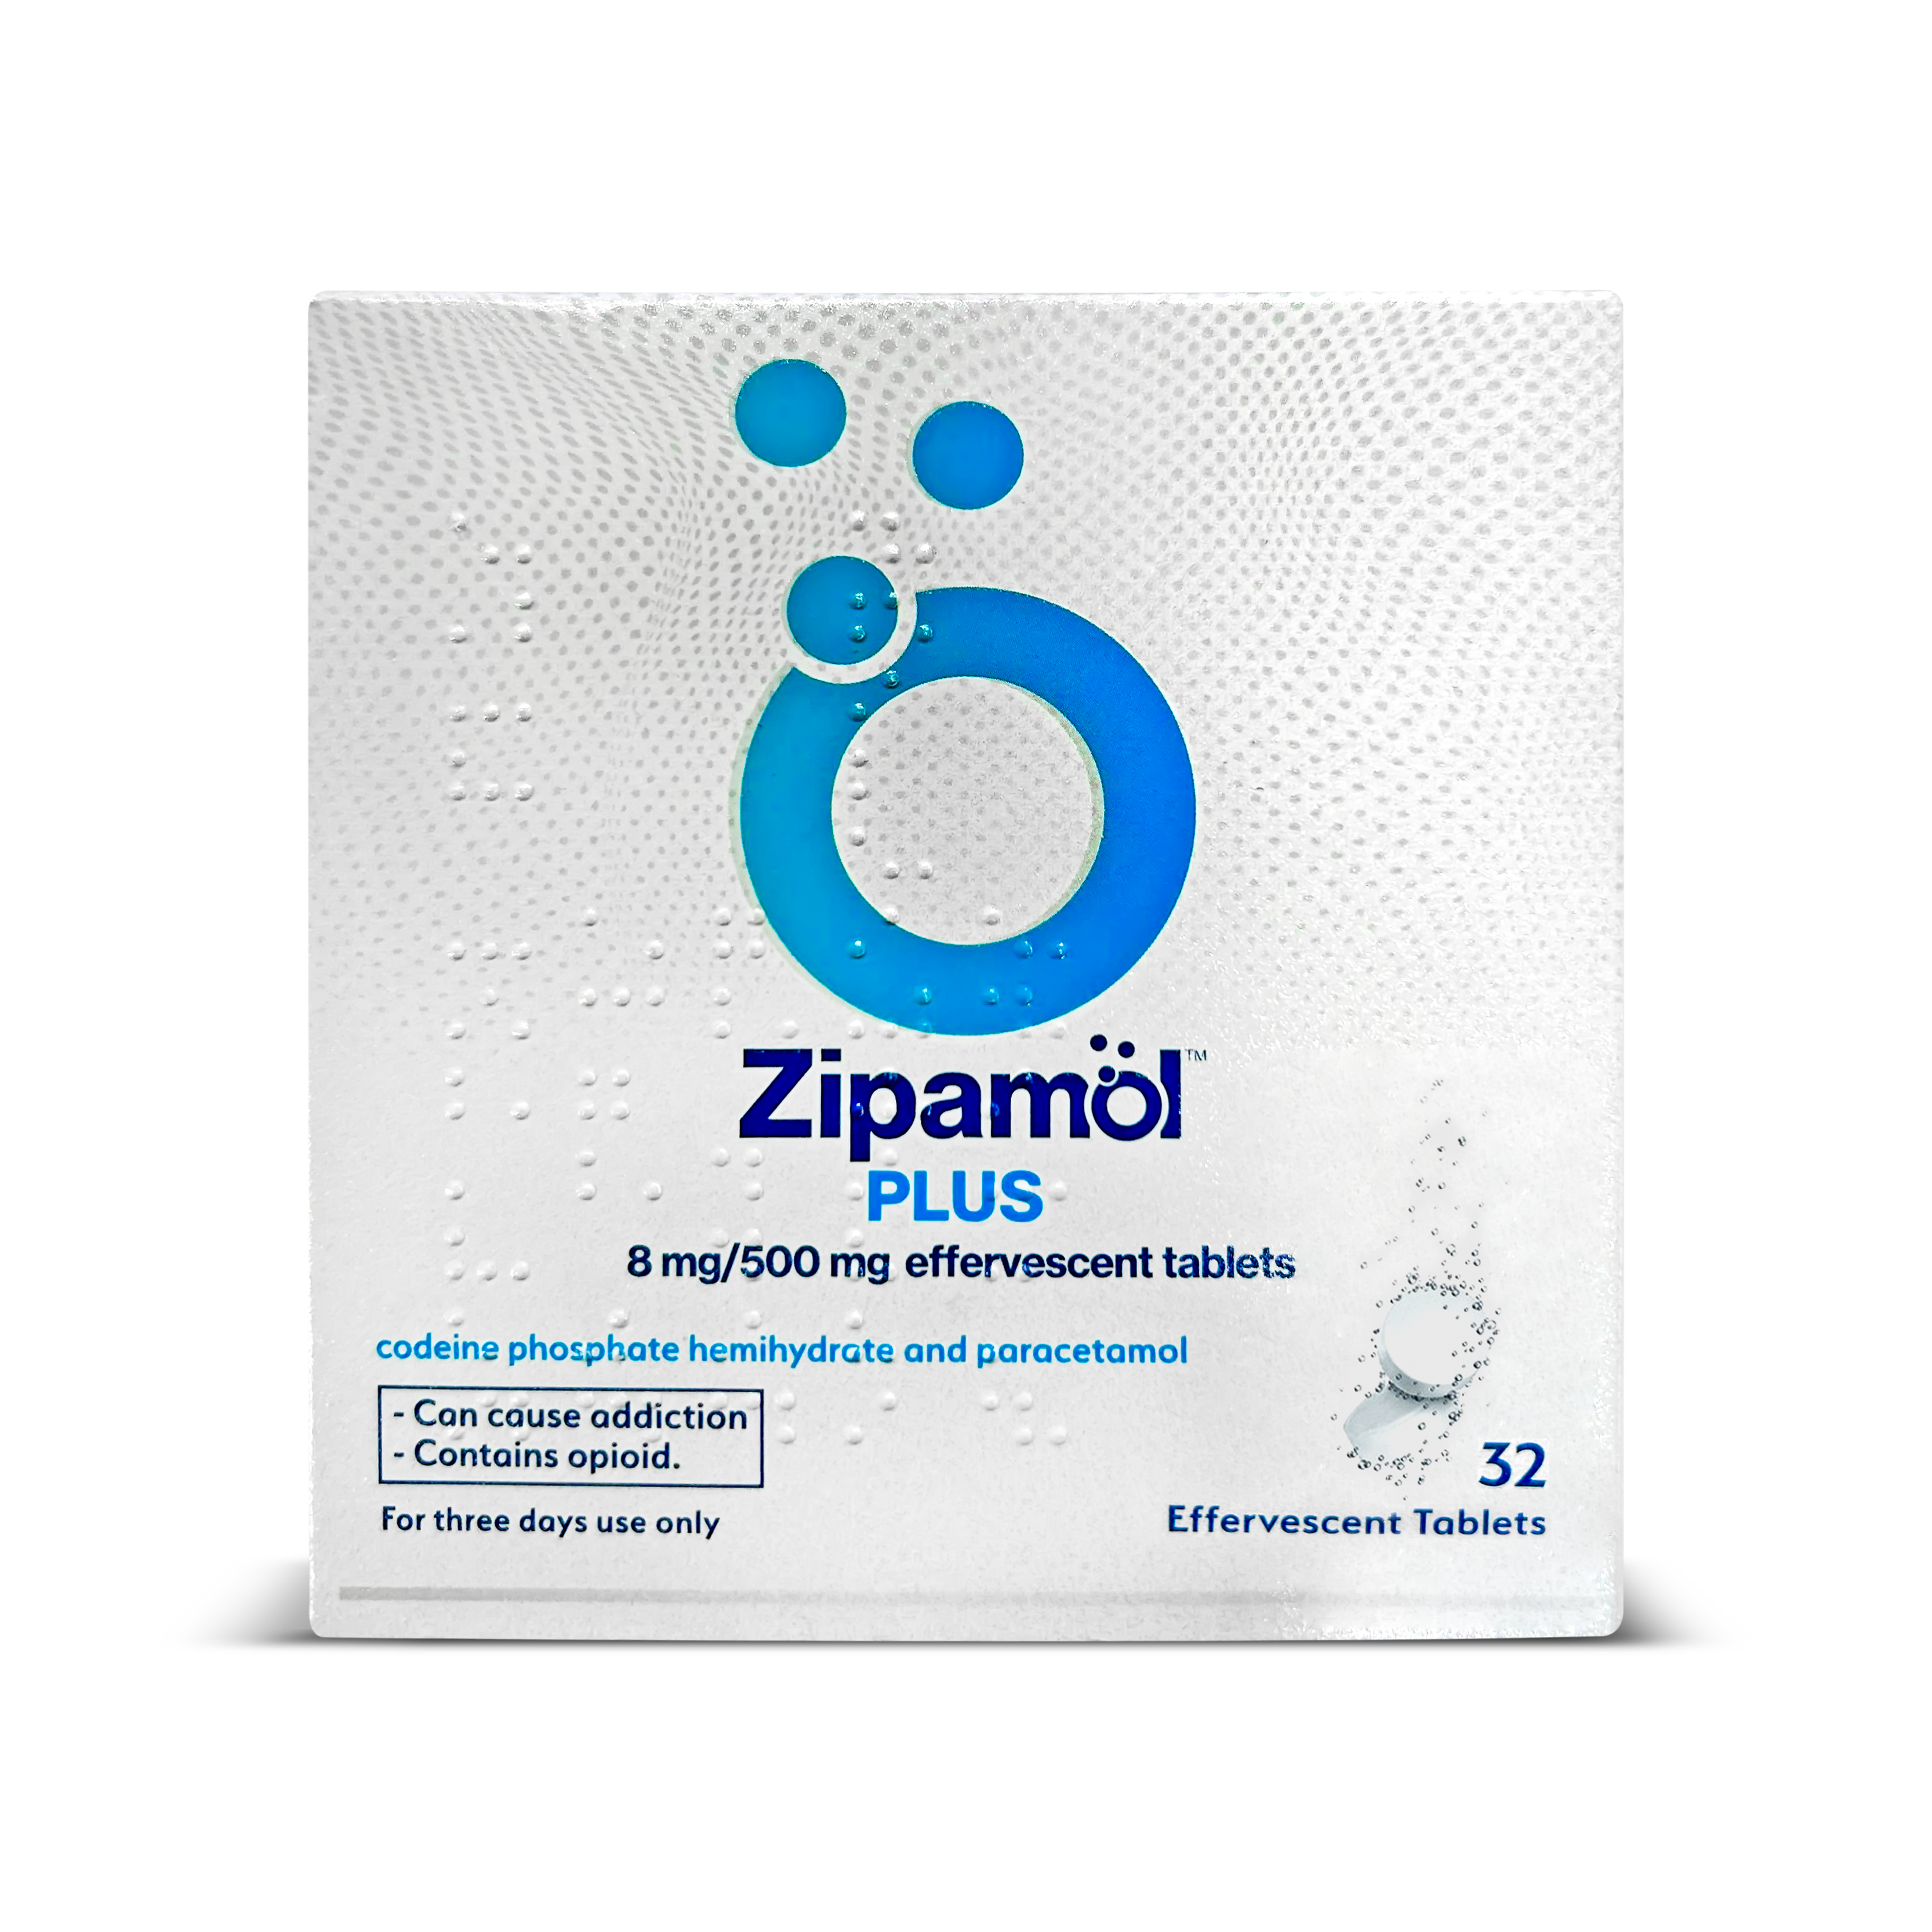 Zipamol Plus 8mg/500mg Effervescent Tablets - 32 Tablets